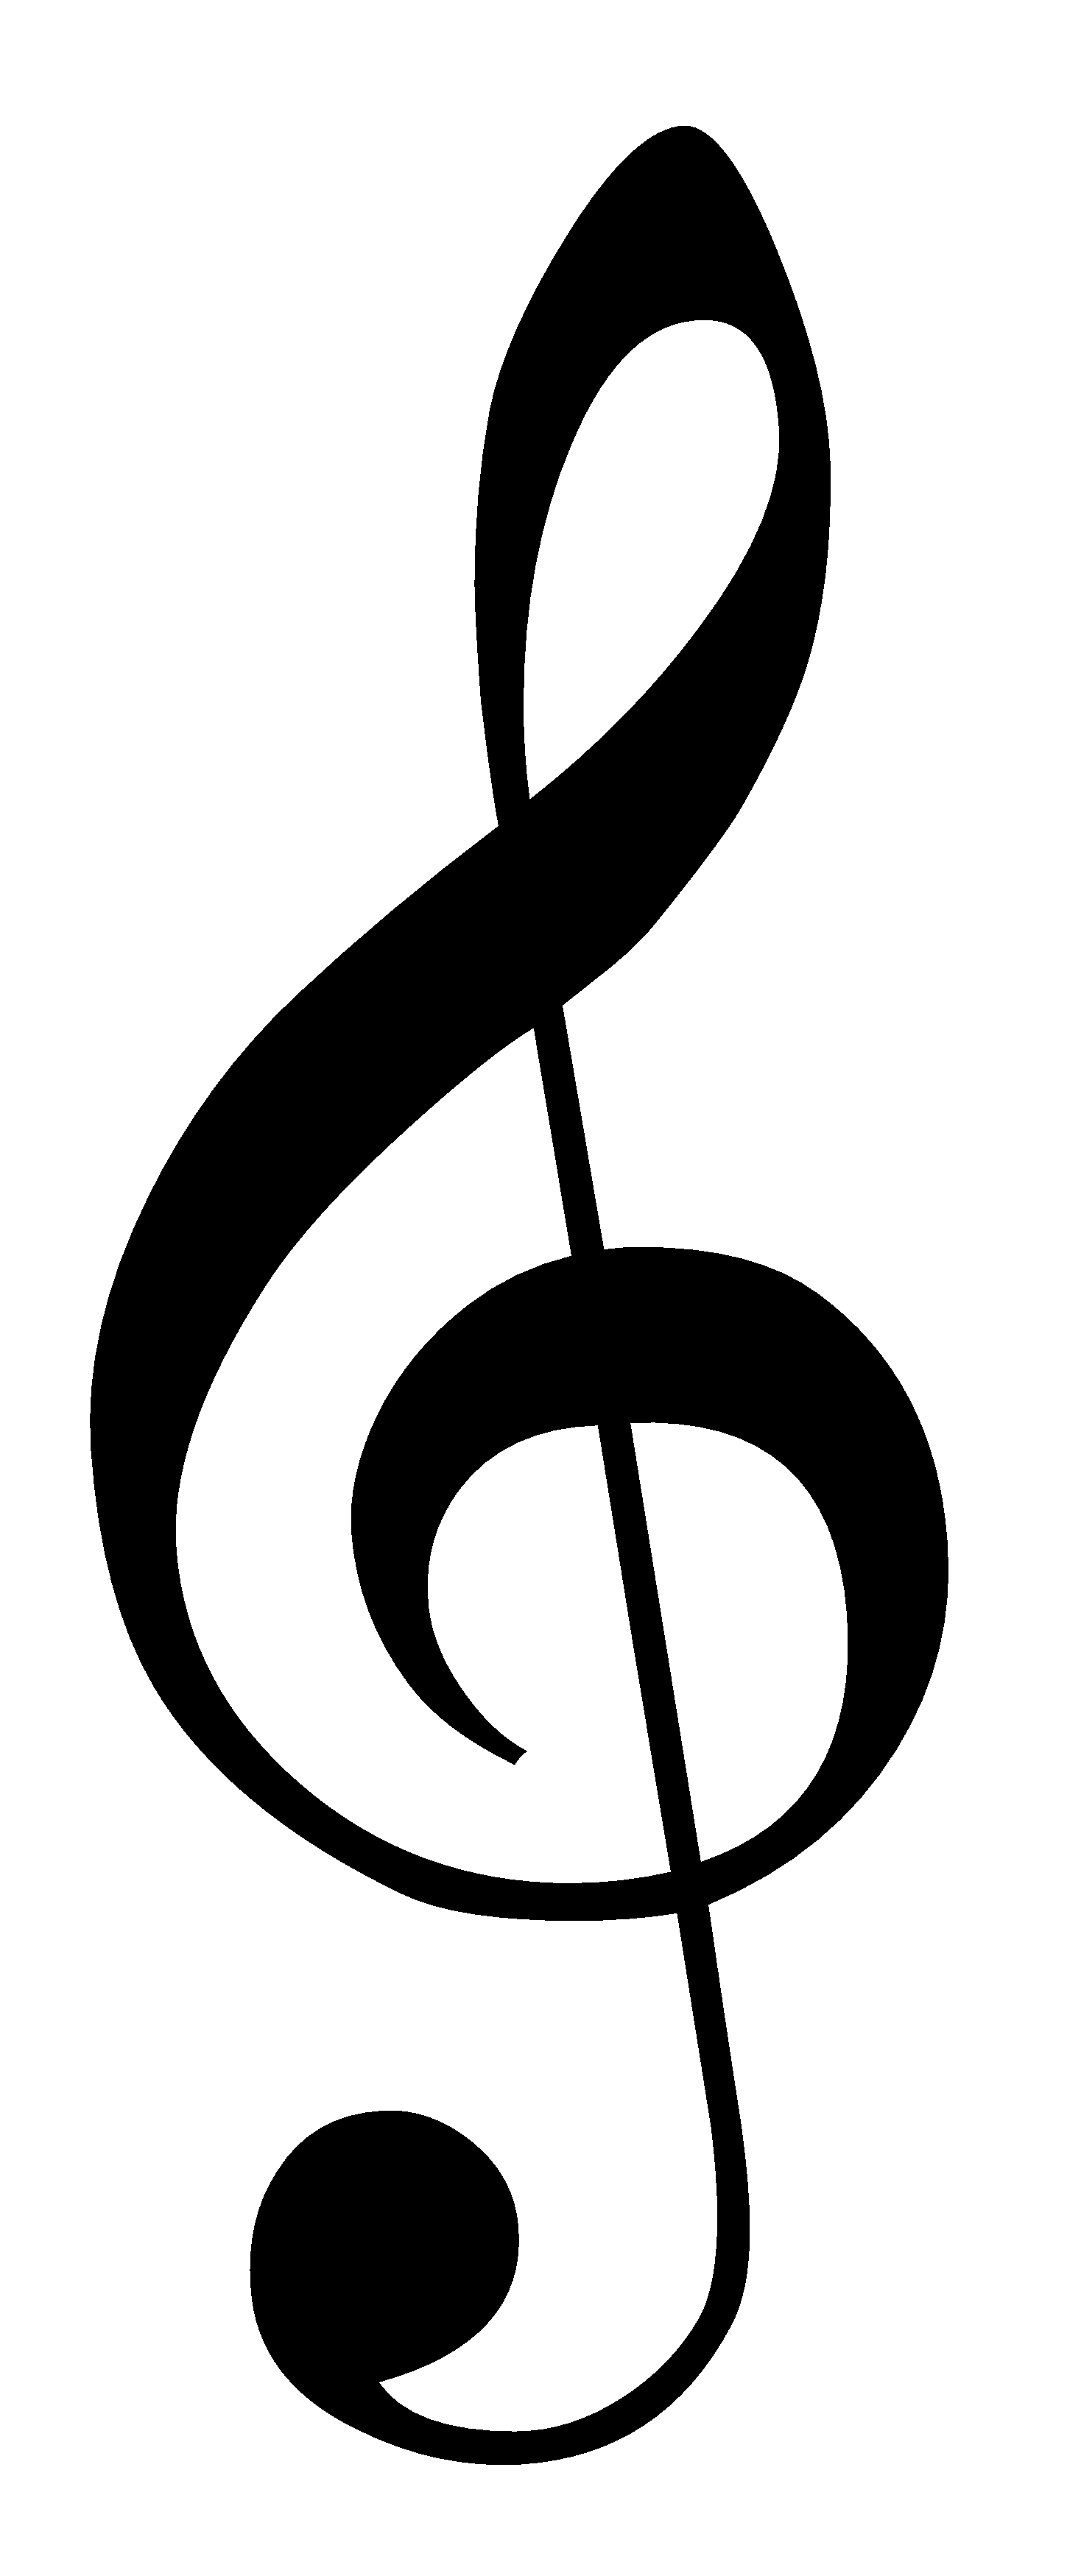 Boccherini - Concertino for Horn